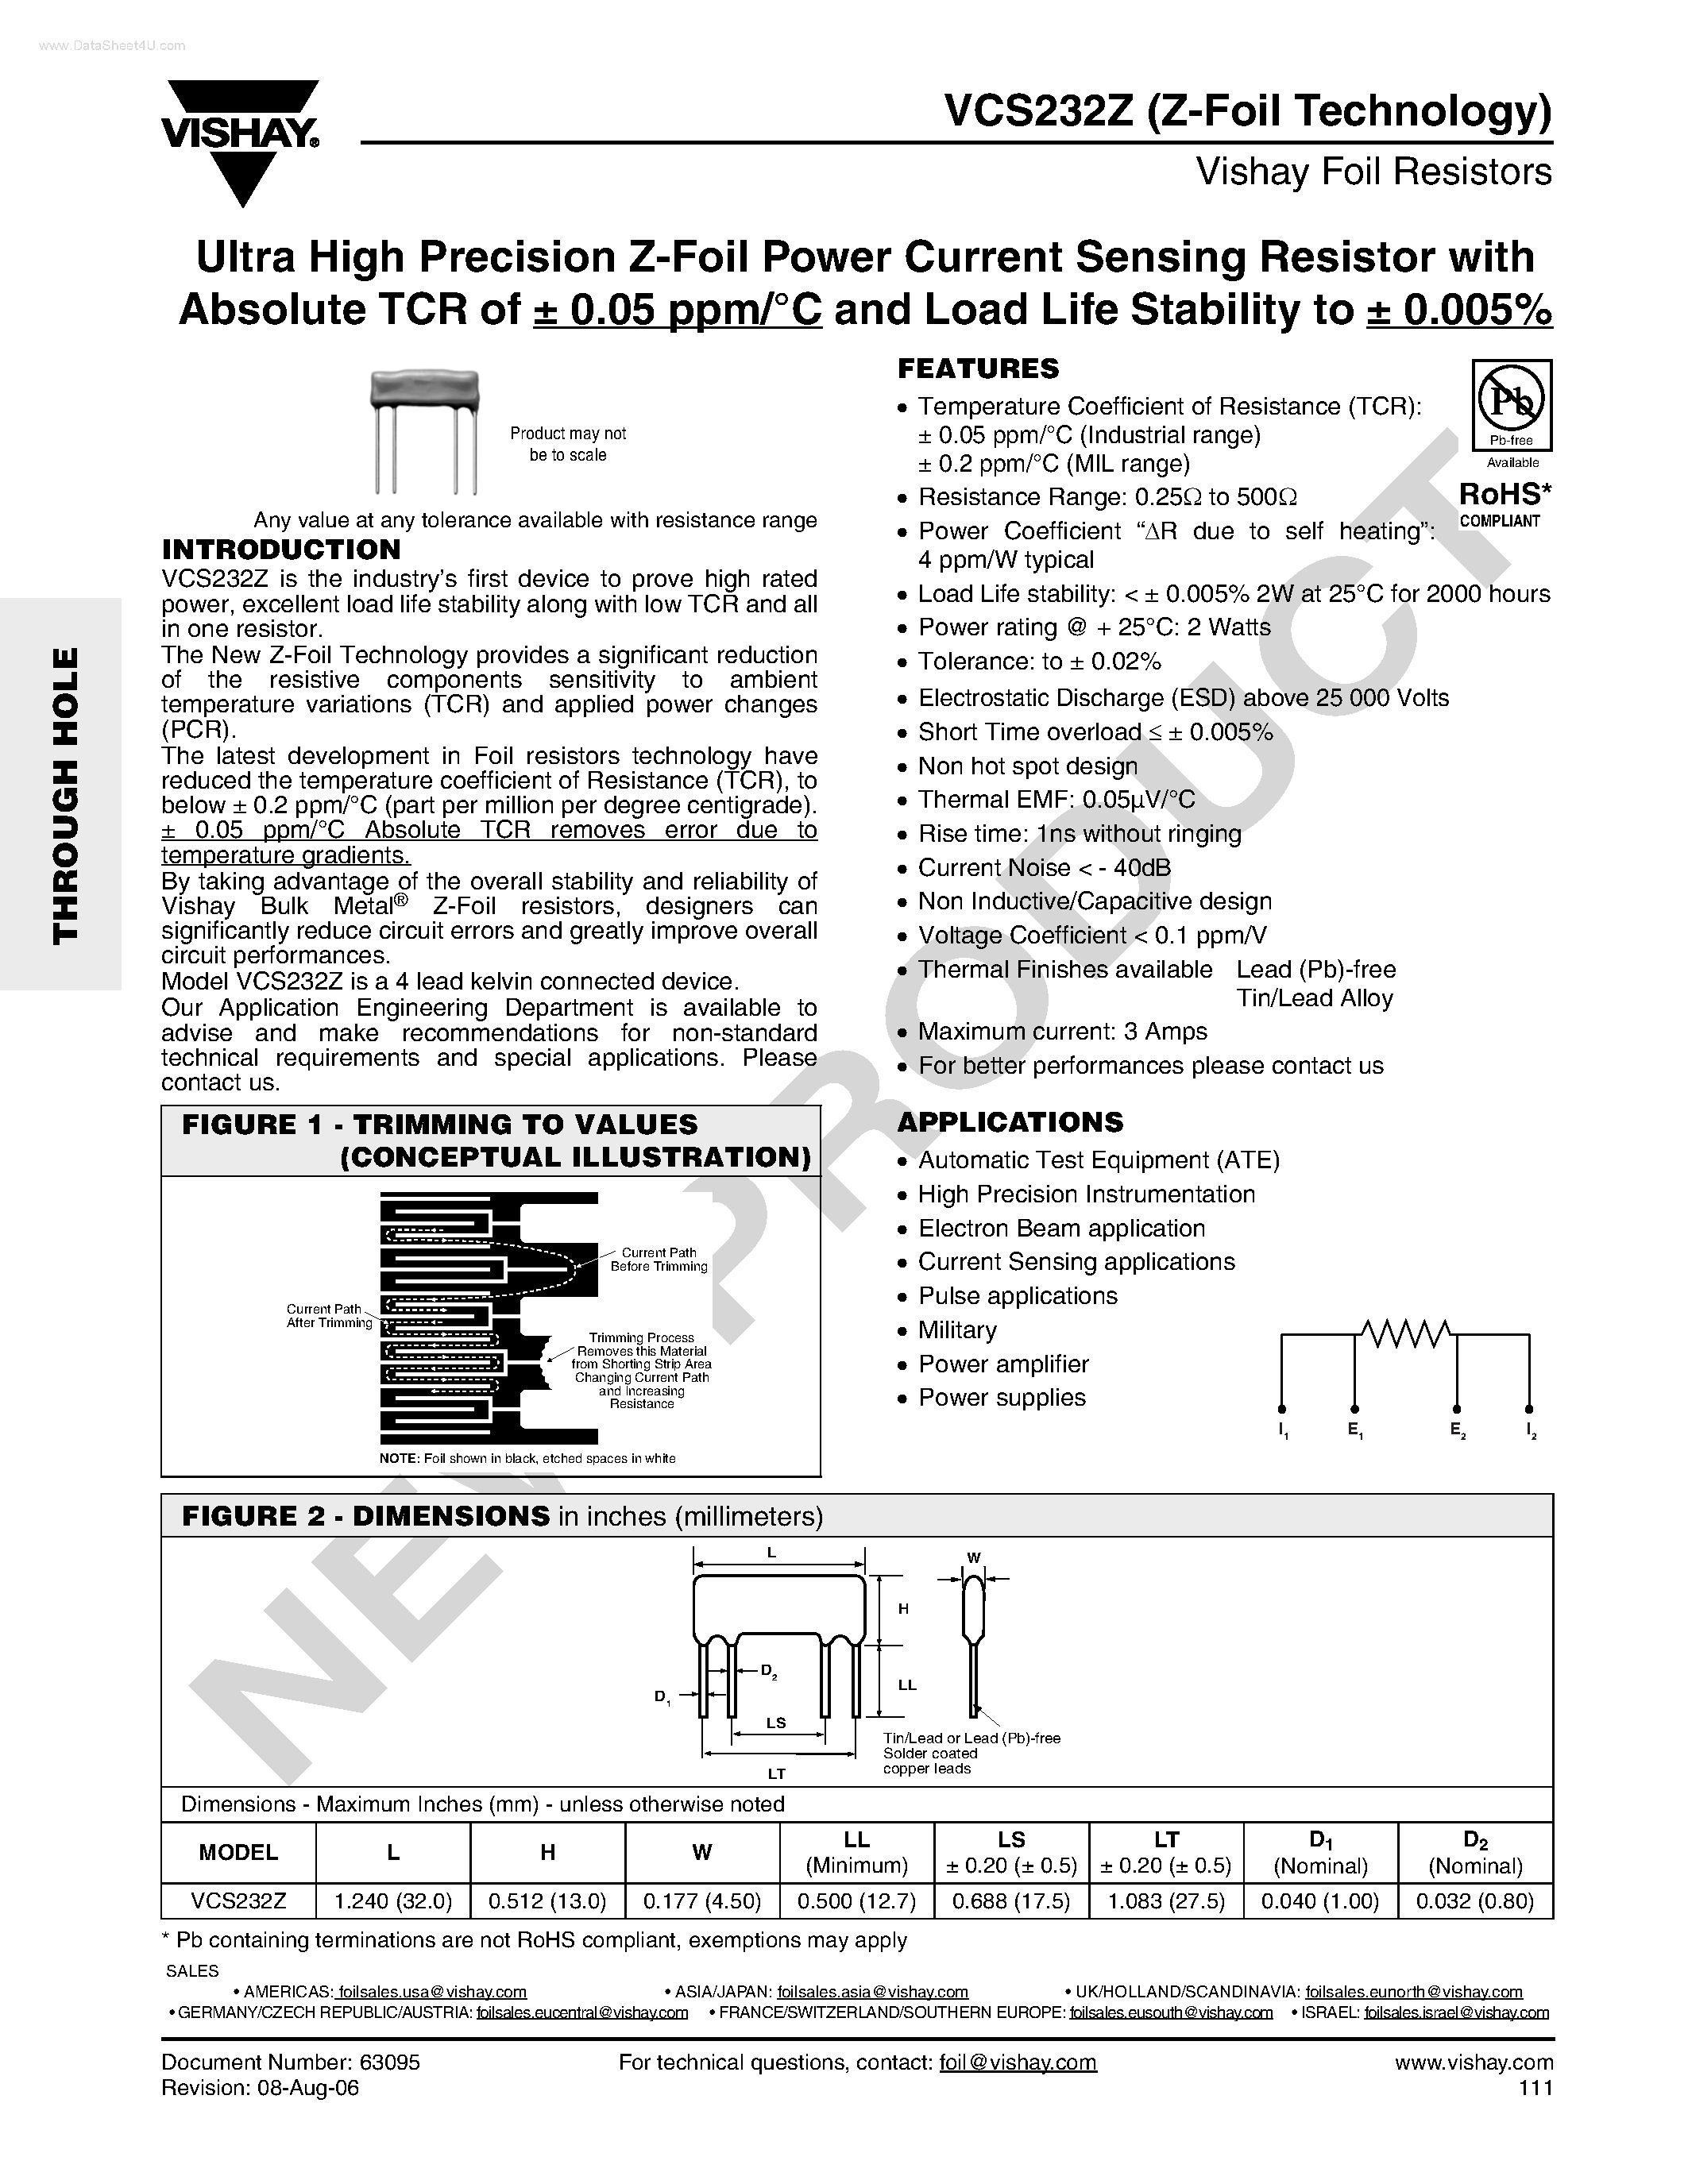 Даташит VCS232Z - Ultra High Precision Z-Foil Power Current Sensing Resistor страница 1